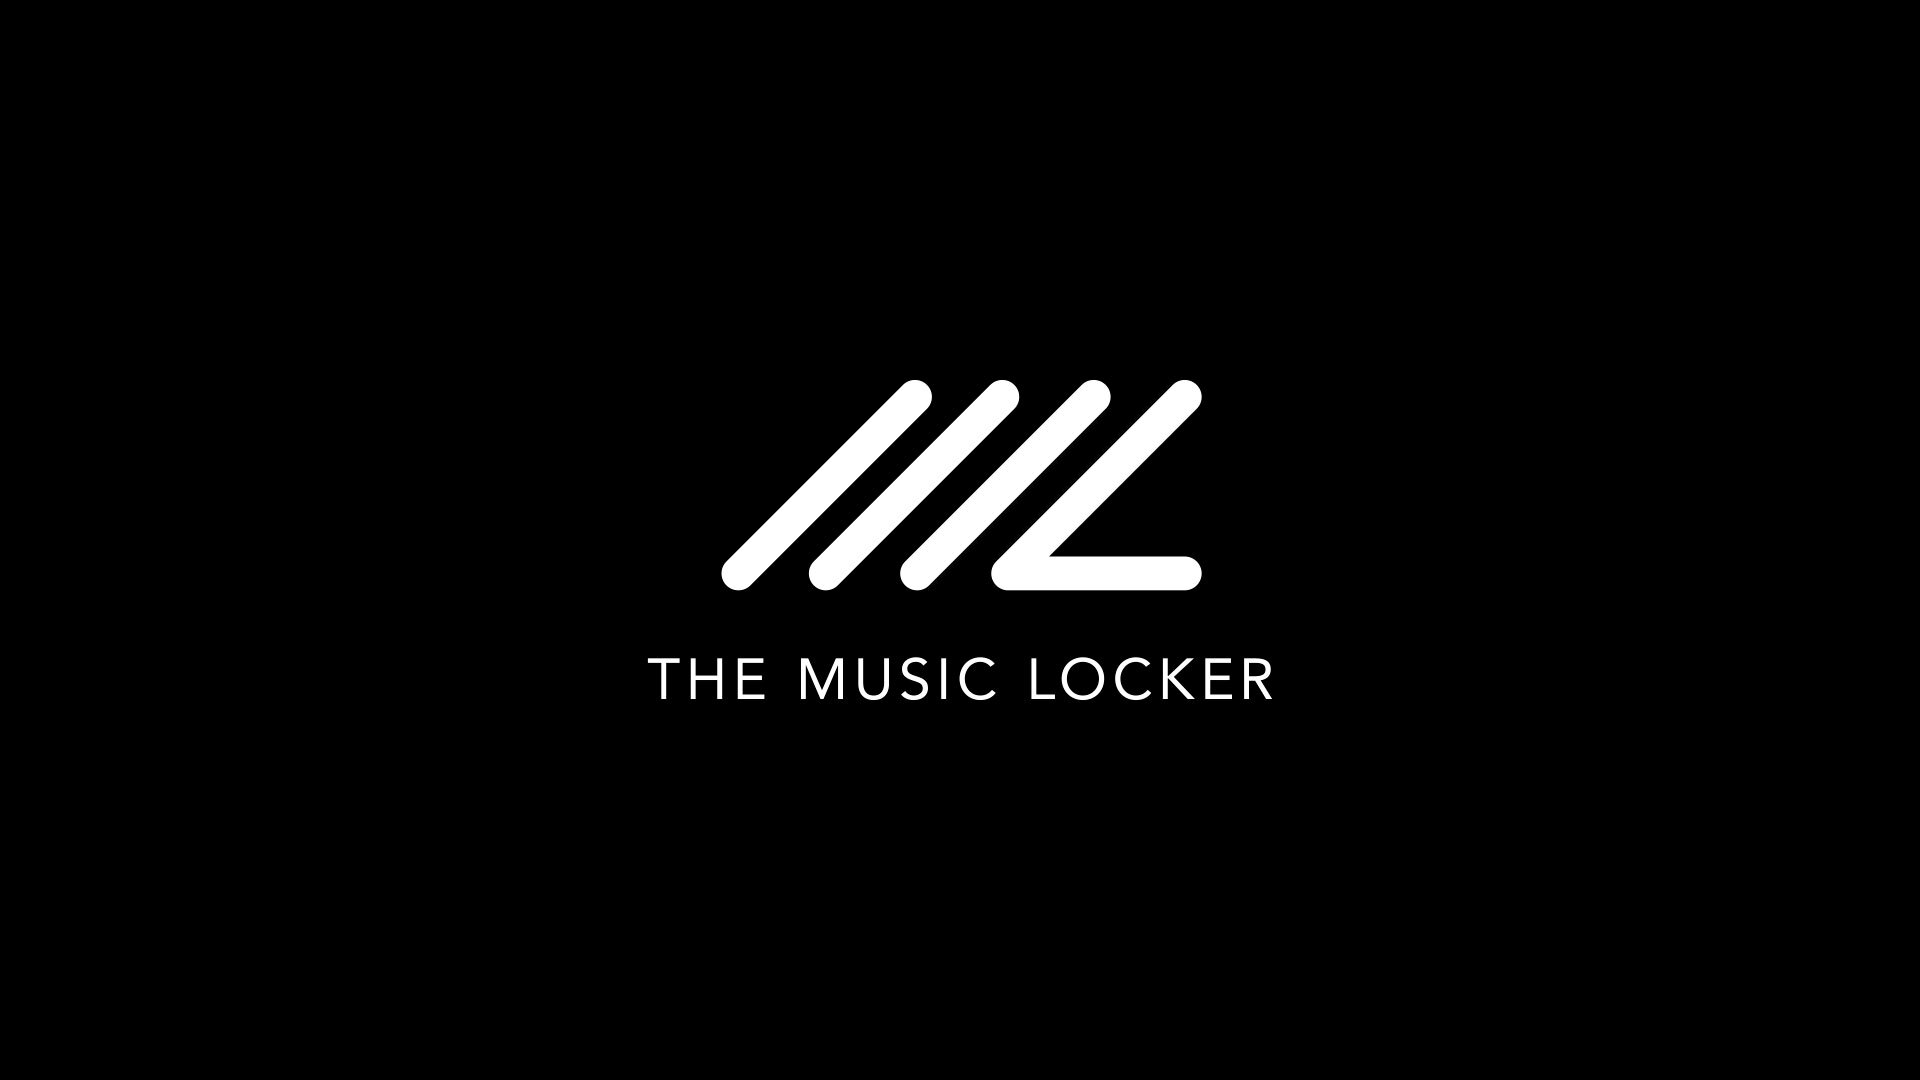 The Music Locker: The Underground Club for Everyone - Rockstar Games